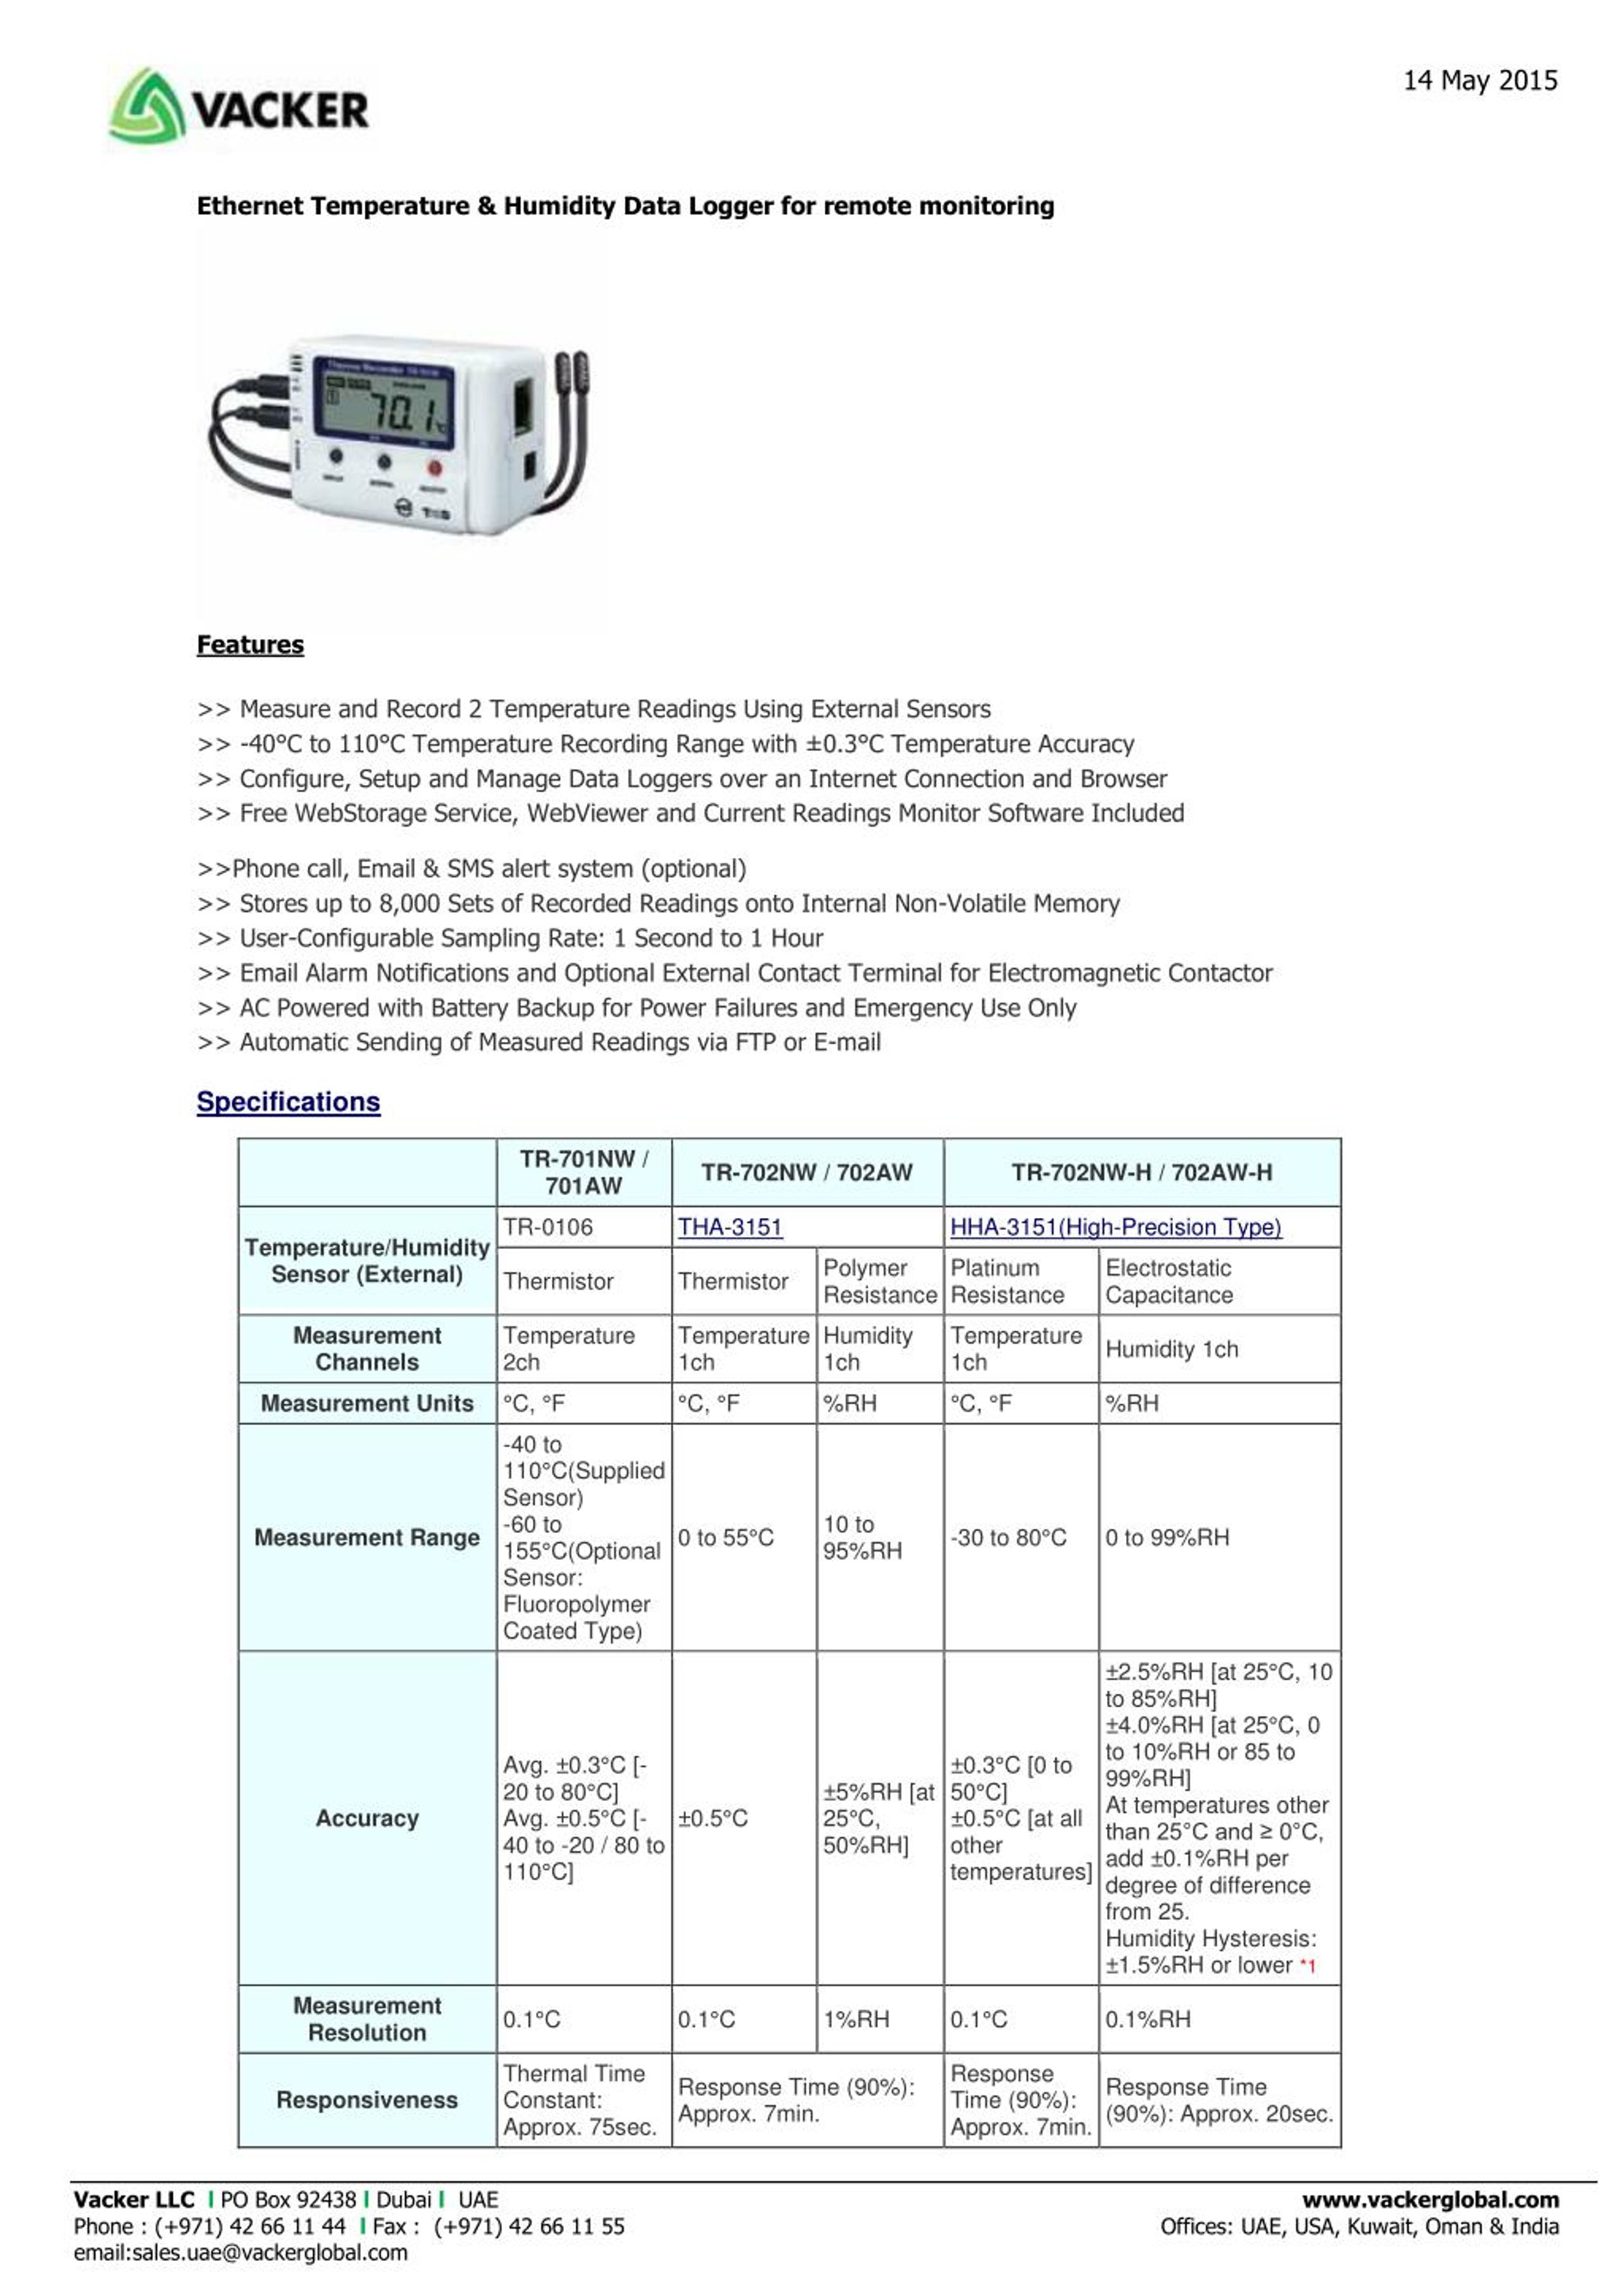 Remote Temperature sensor with recording and alert, Vacker UAE